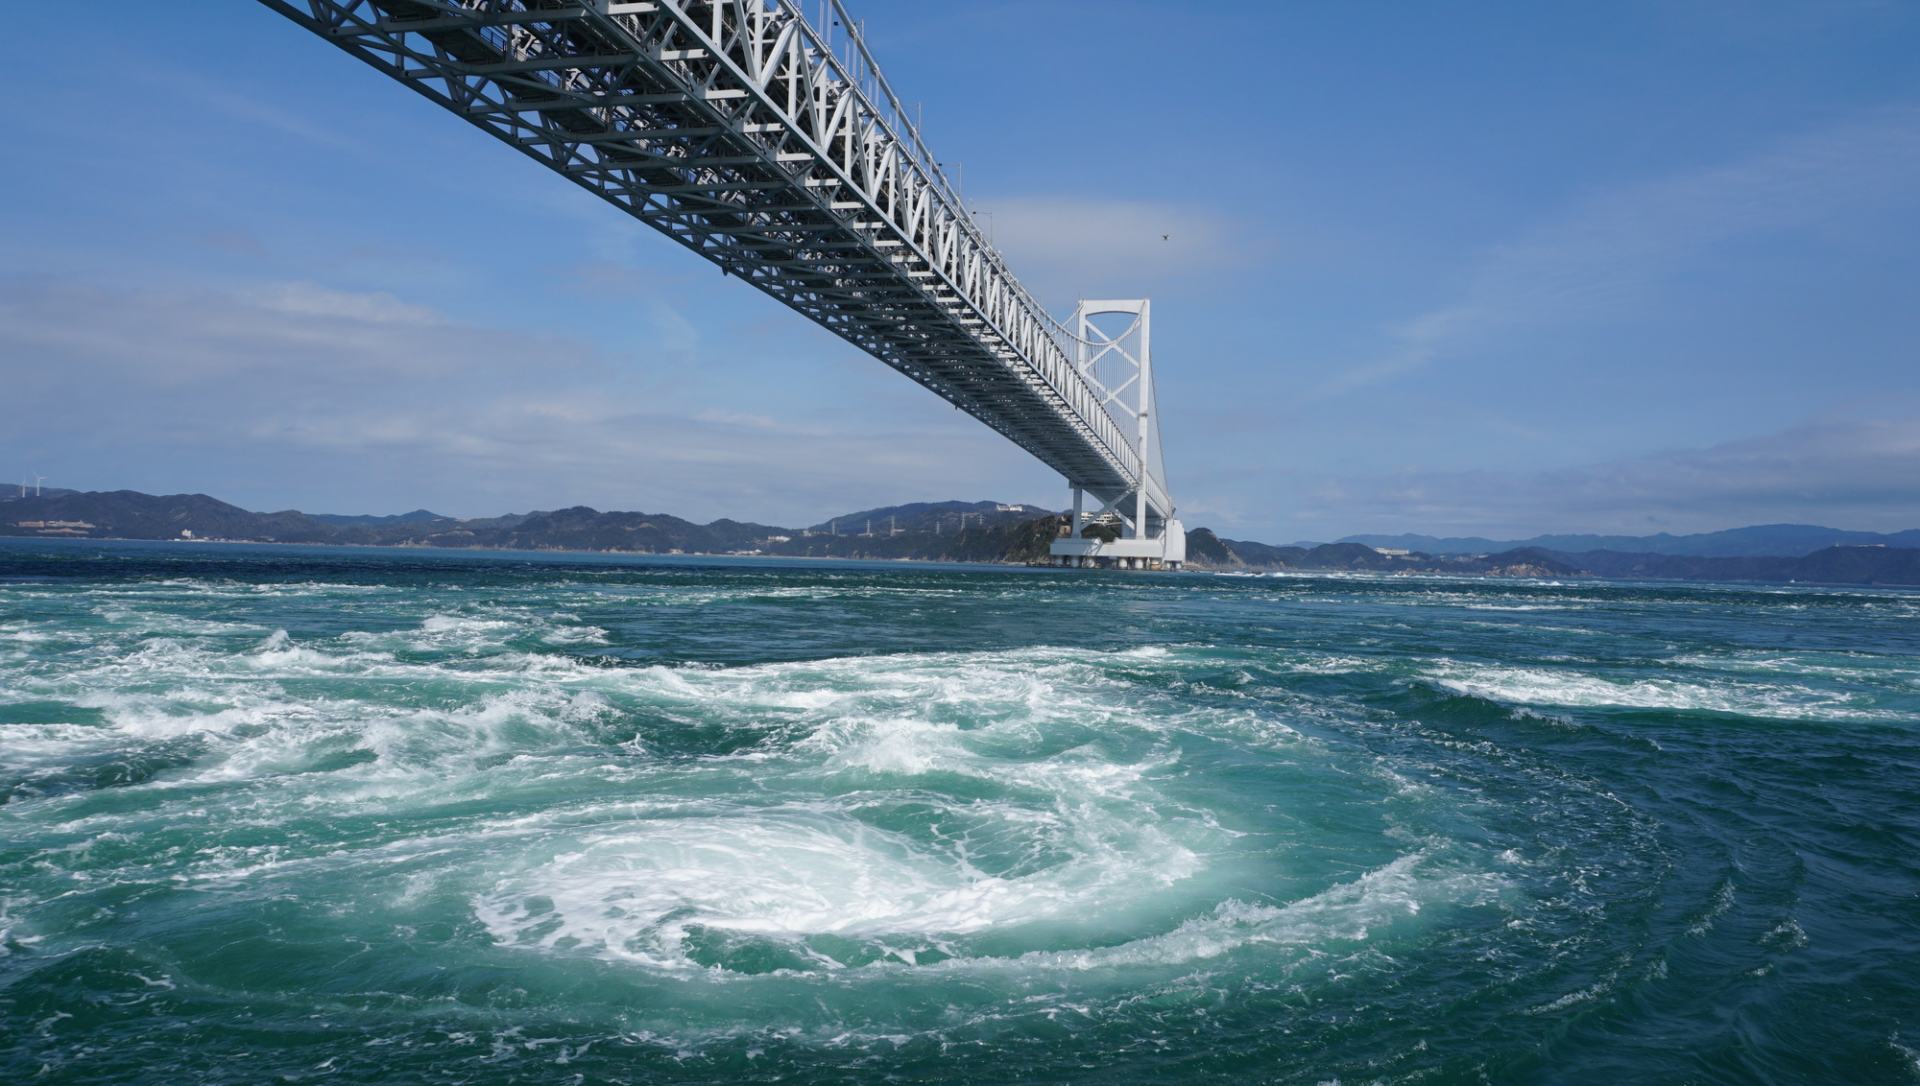 One of Kansai's most spectacular views awaits at Onaruto Bridge and the Naruto Whirlpools.